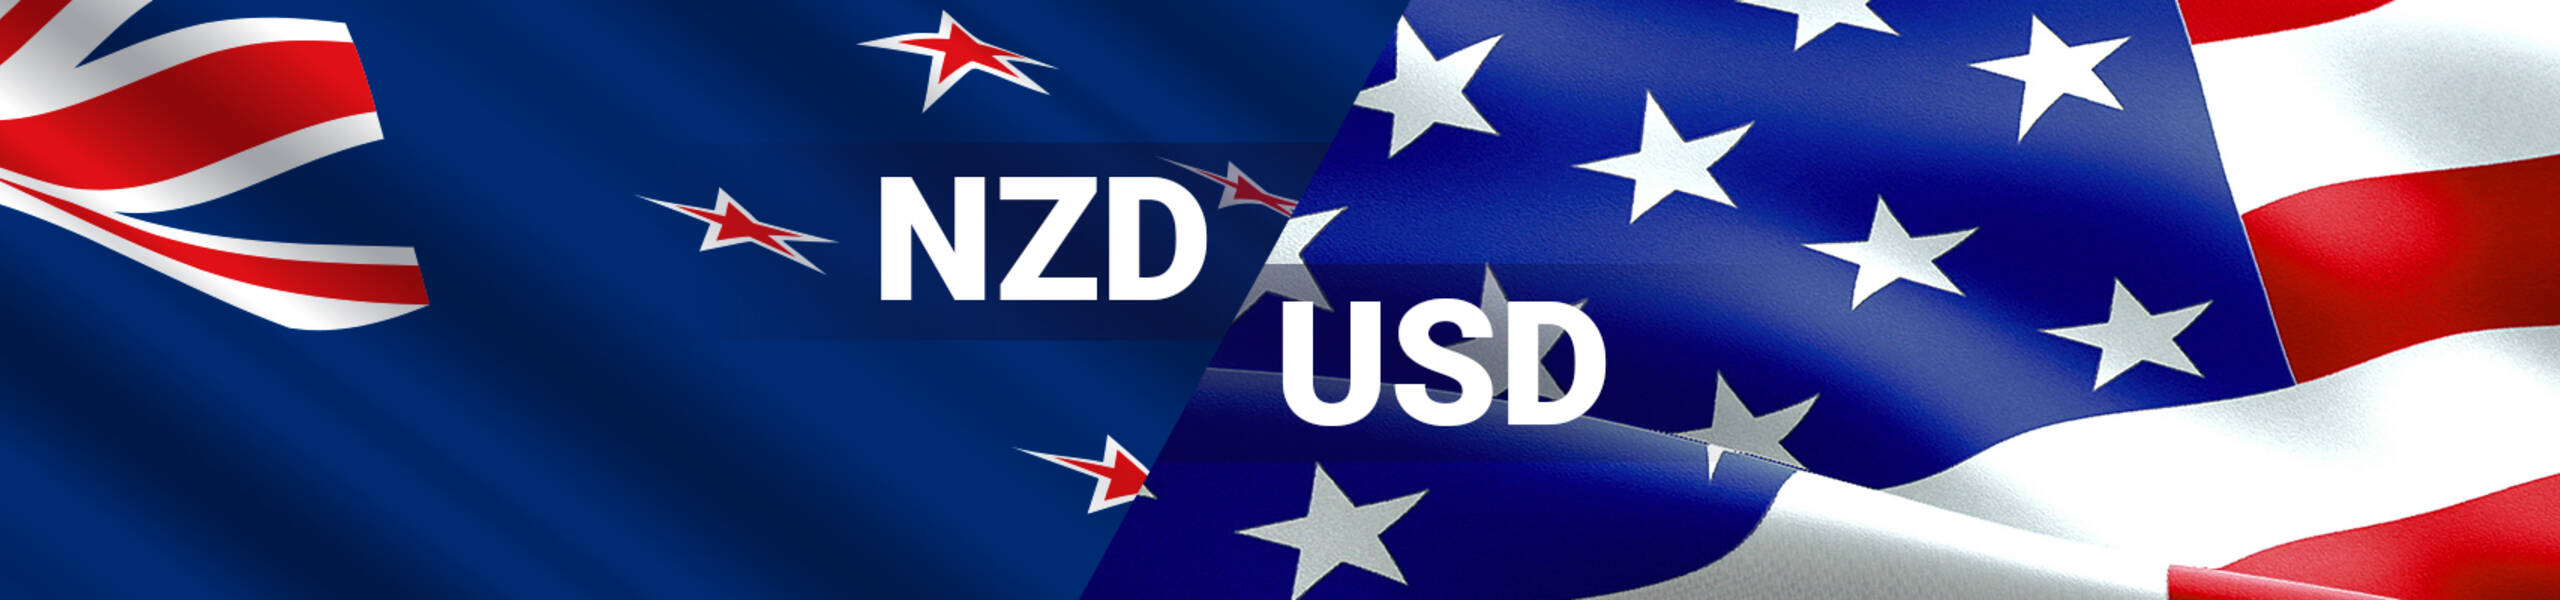 NZD/USD tocando una zona de amplia oferta vendedora